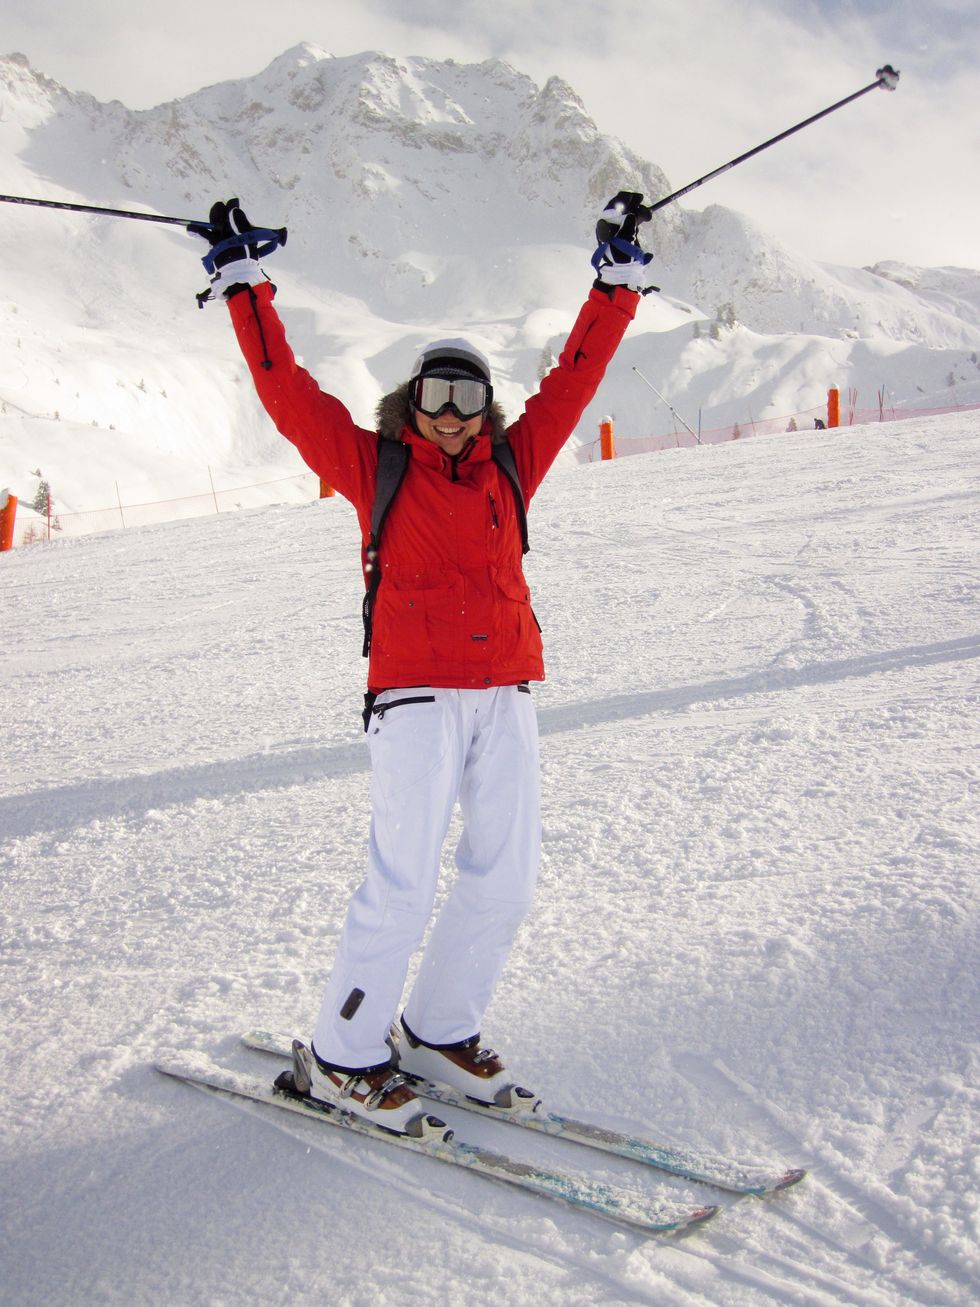 Ski Resorts: Where The Winter Chills Should Take You